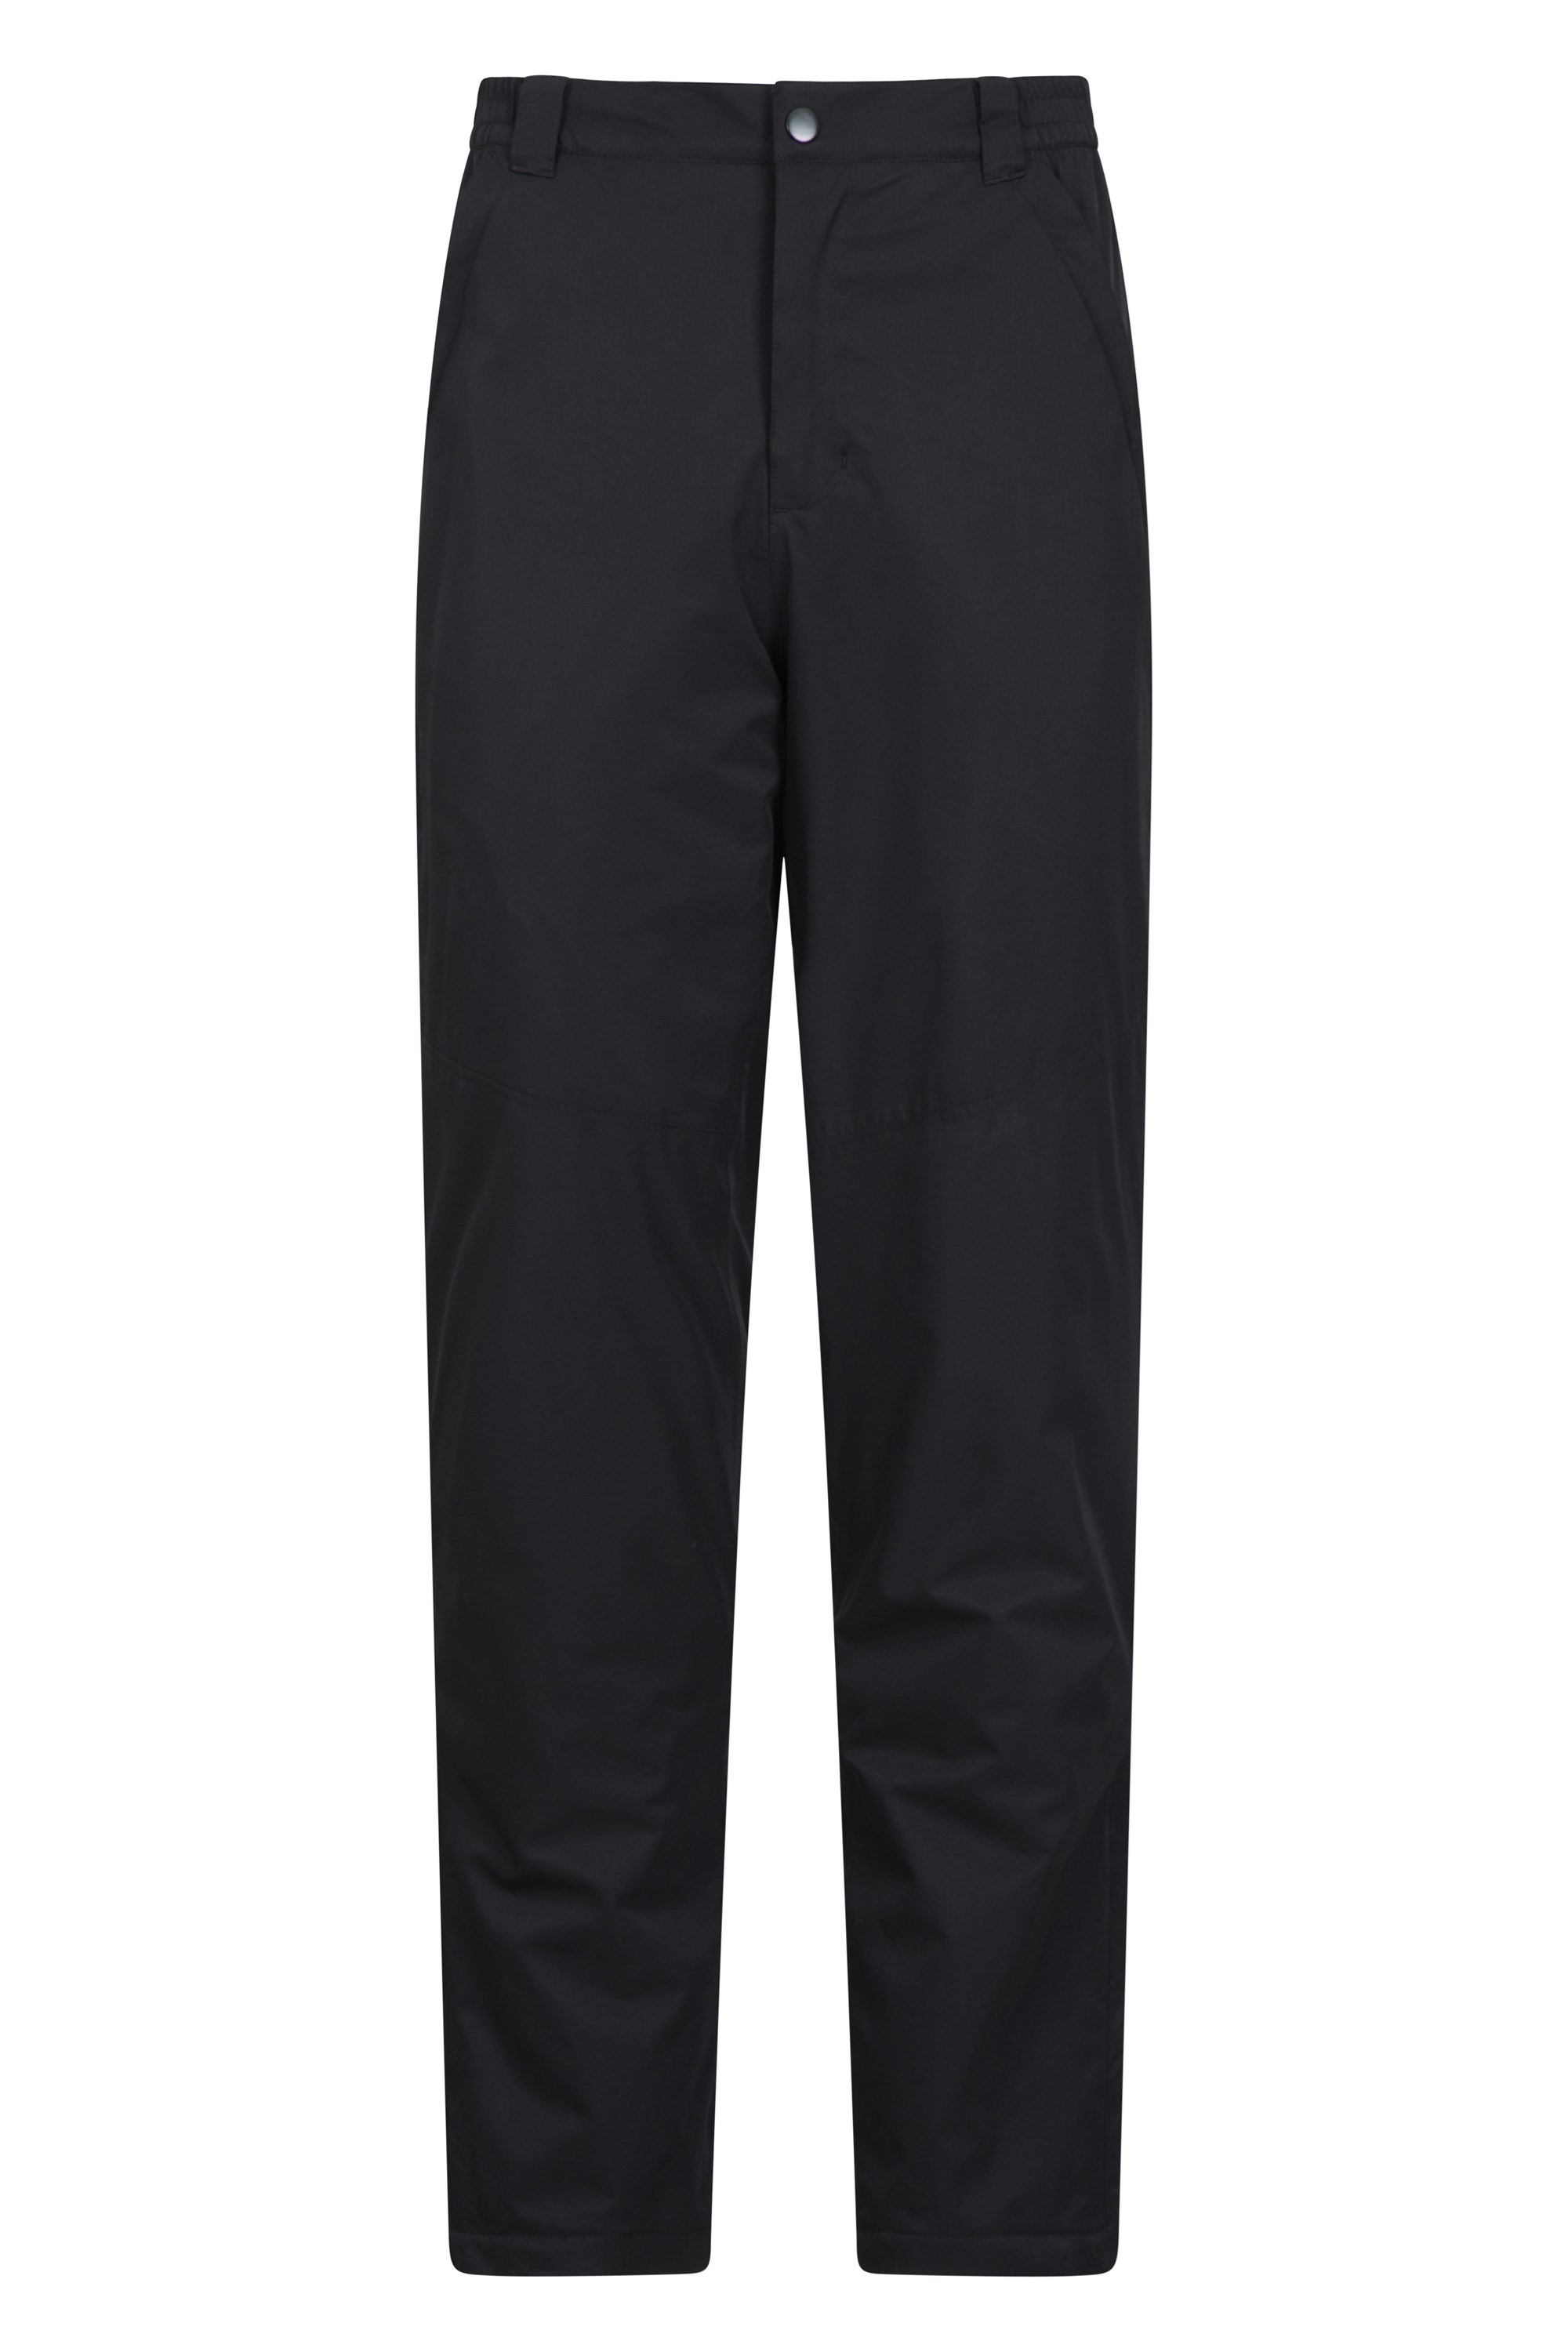 Terrain Mens Insulated Trousers - Long Length - Black